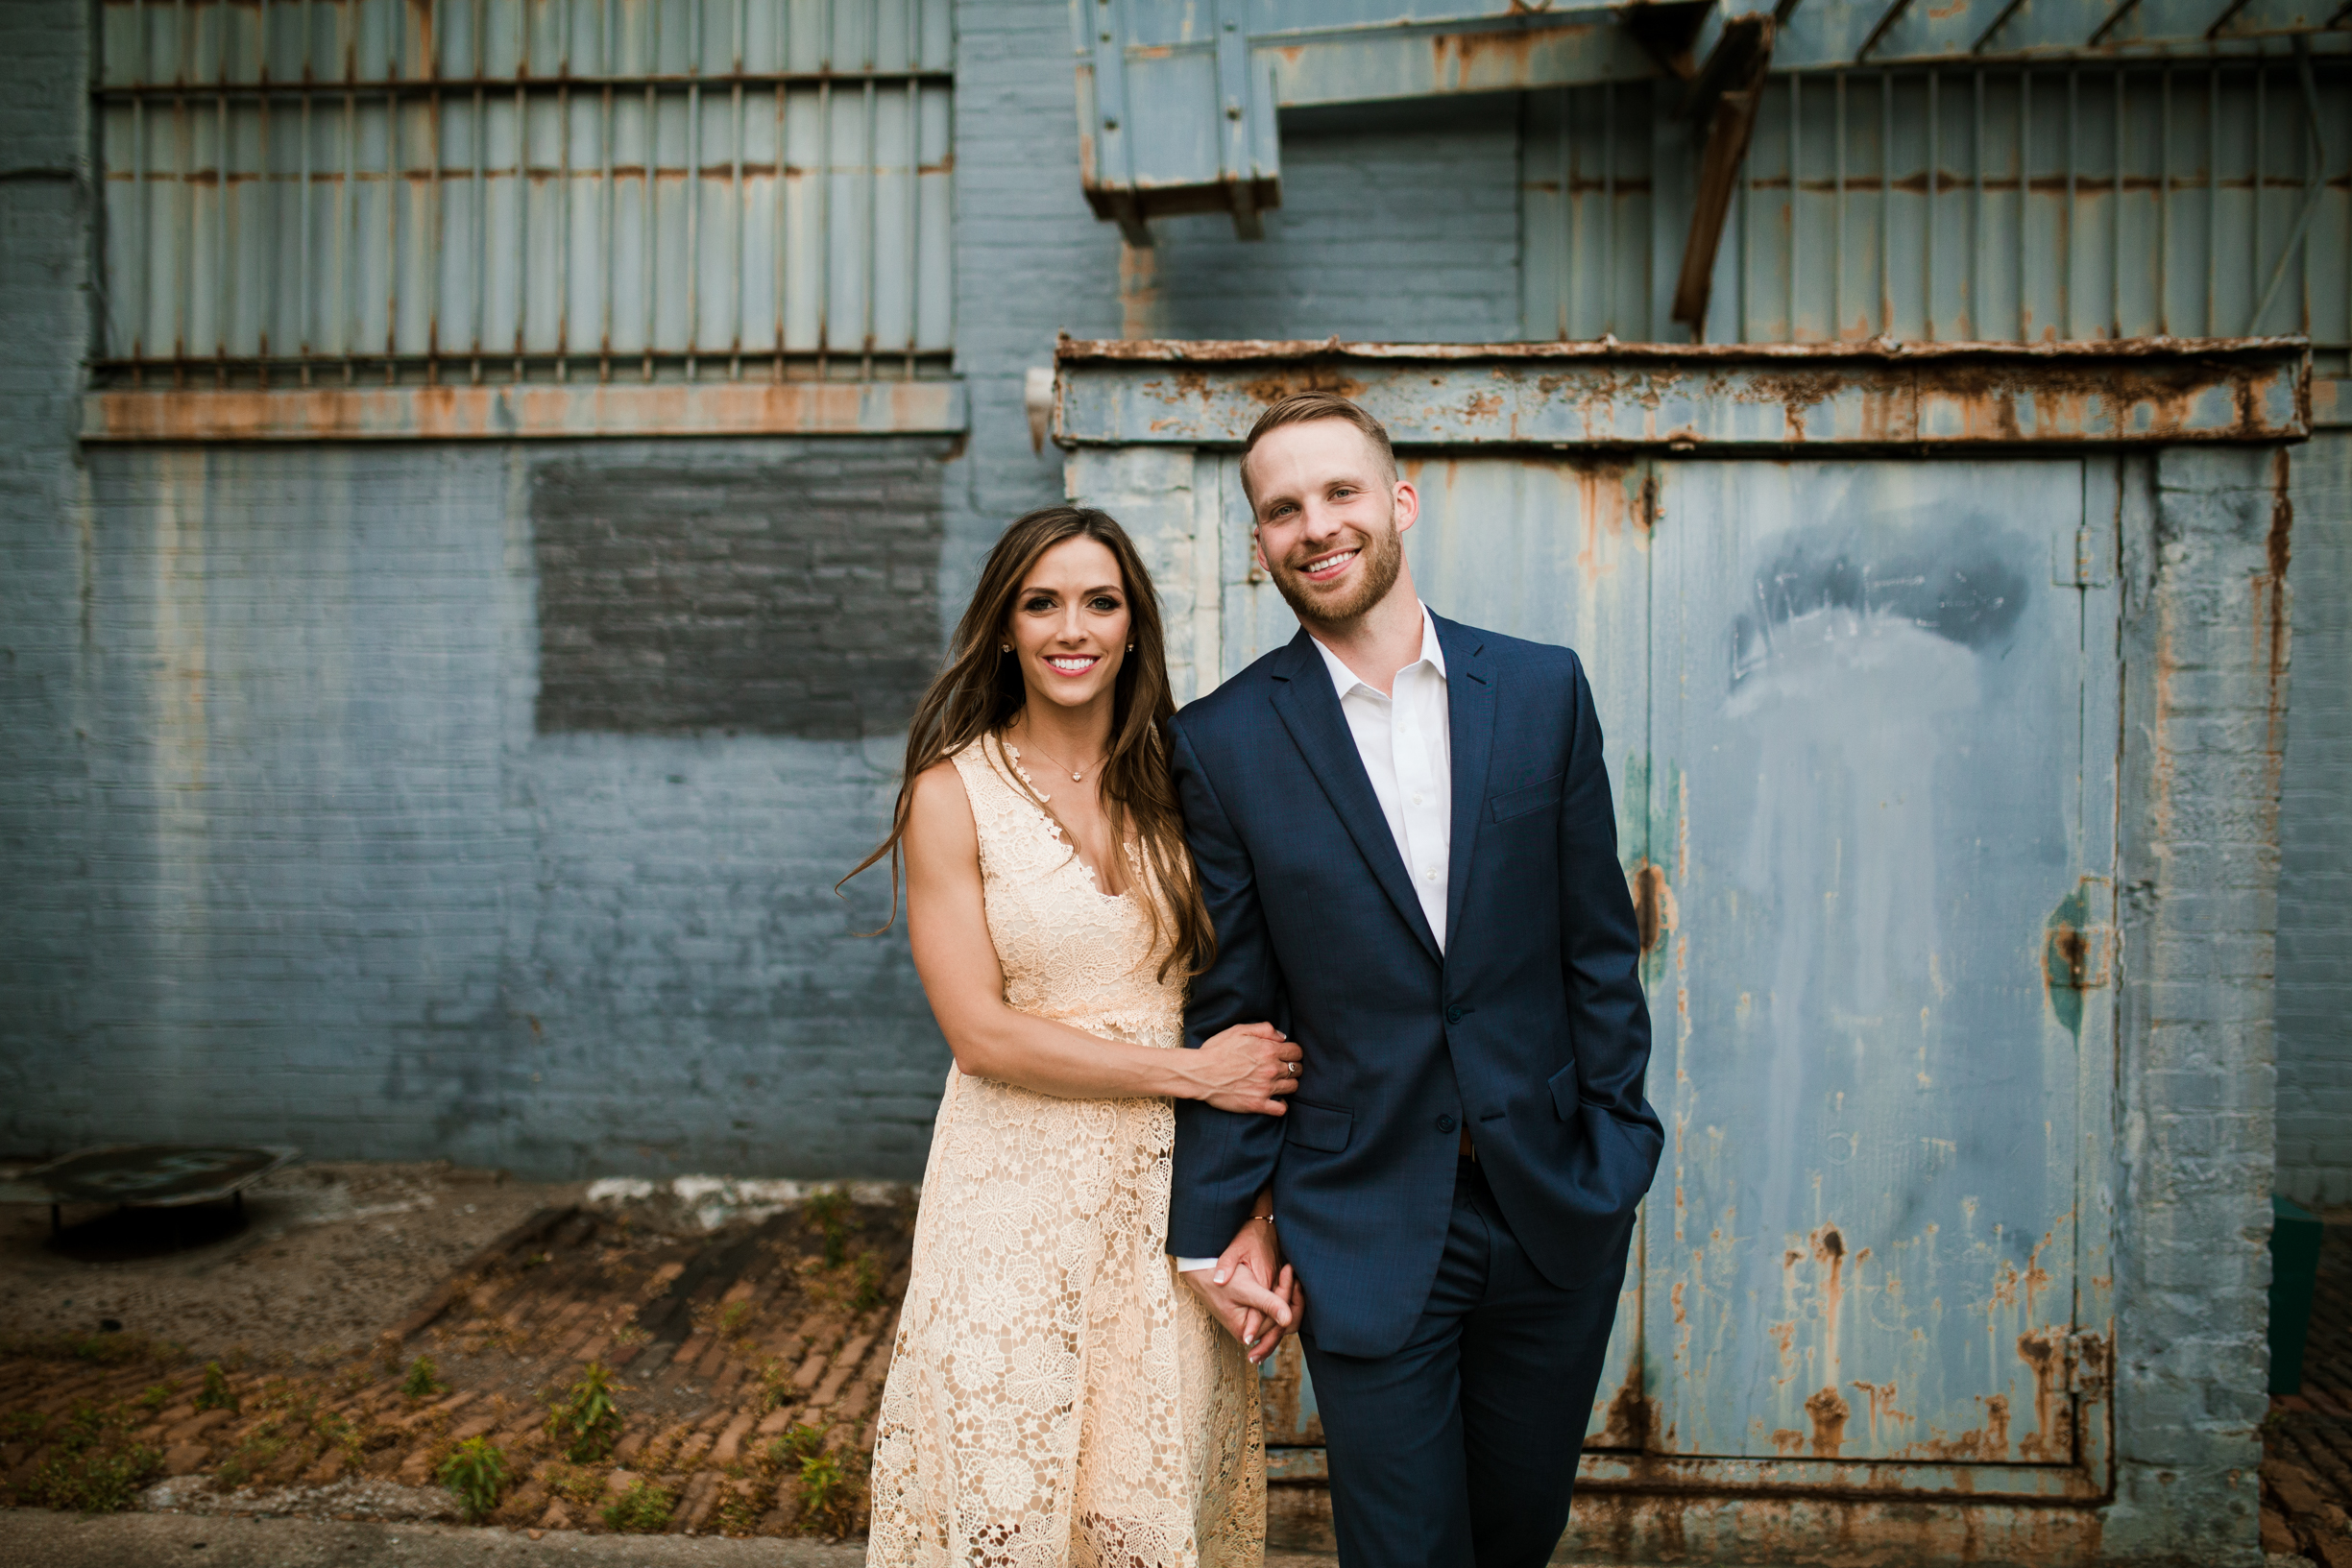 Victoria & Chad Engagement 2018 Crystal Ludwick Photo Louisville Kentucky Wedding Photographer WEBSITE (42 of 48).jpg